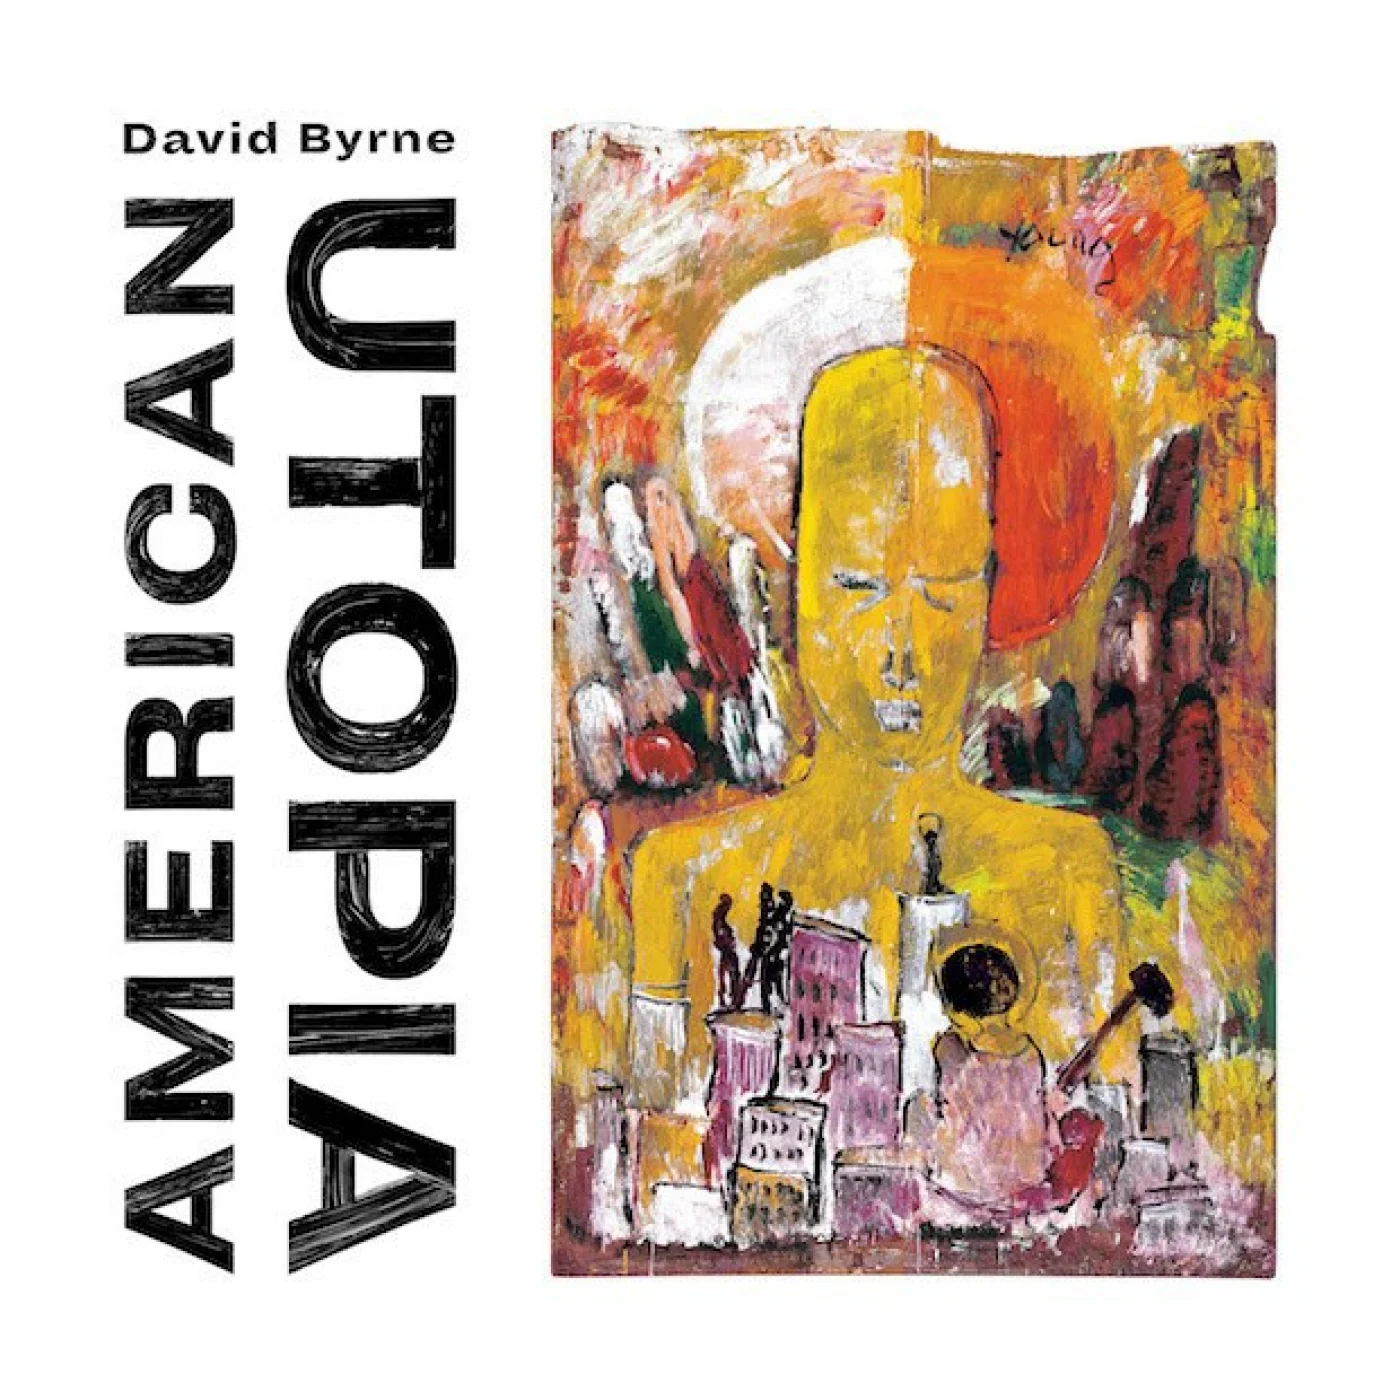 Atrao do Lollapalooza Brasil 2018, David Byrne anuncia lbum depois de 14 anos